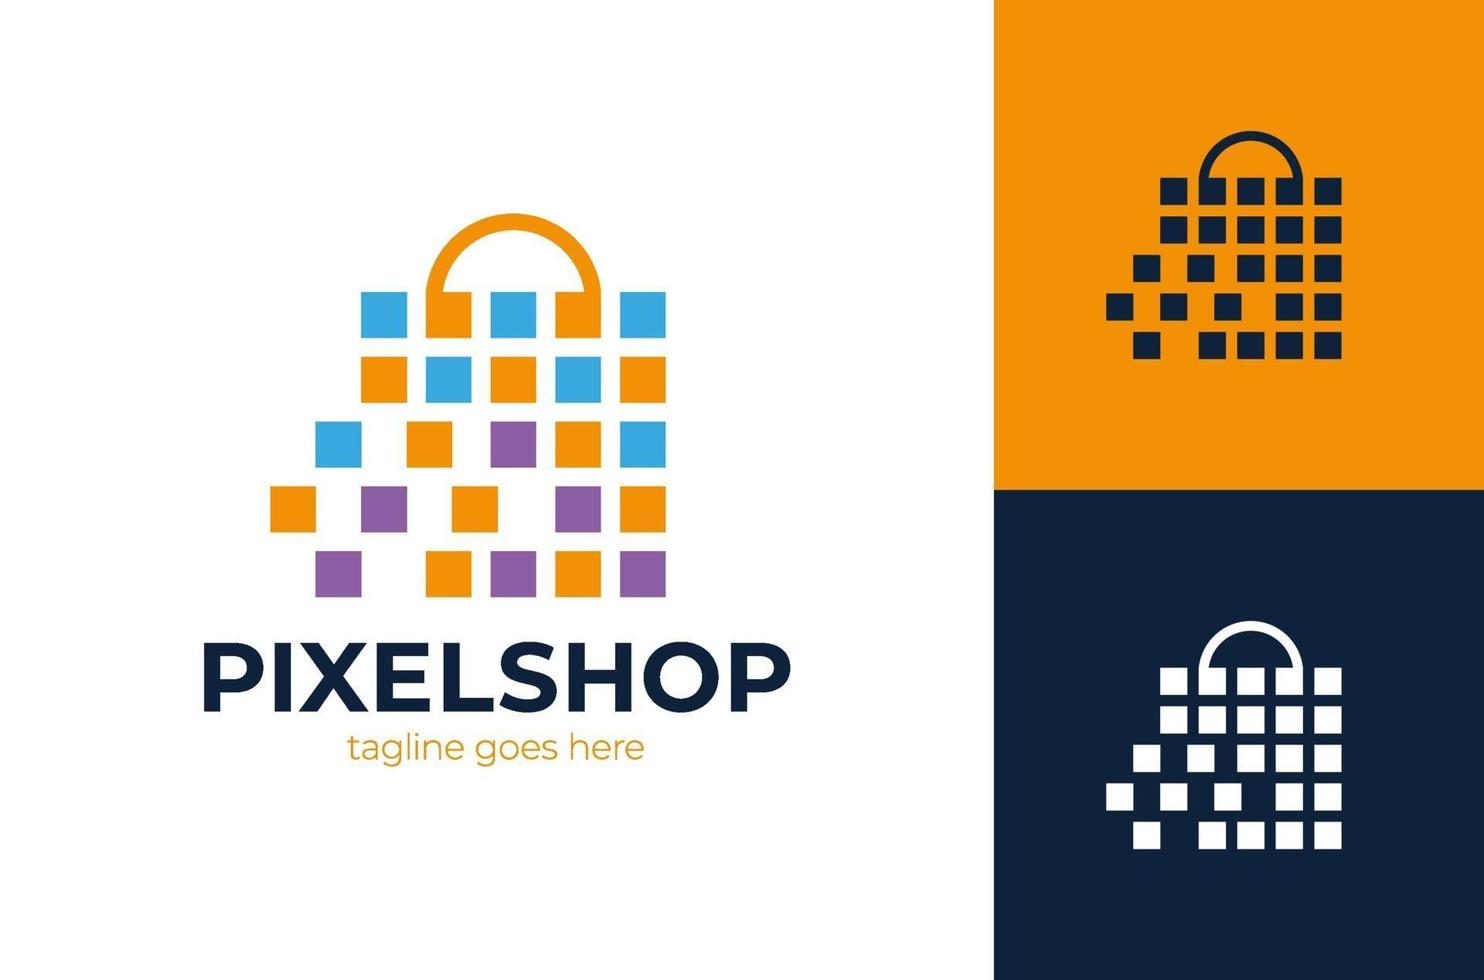 vetor de design de logotipo de mercado de loja de pixel, designs de logotipo de sacola de compras, conceito abstrato para loja online